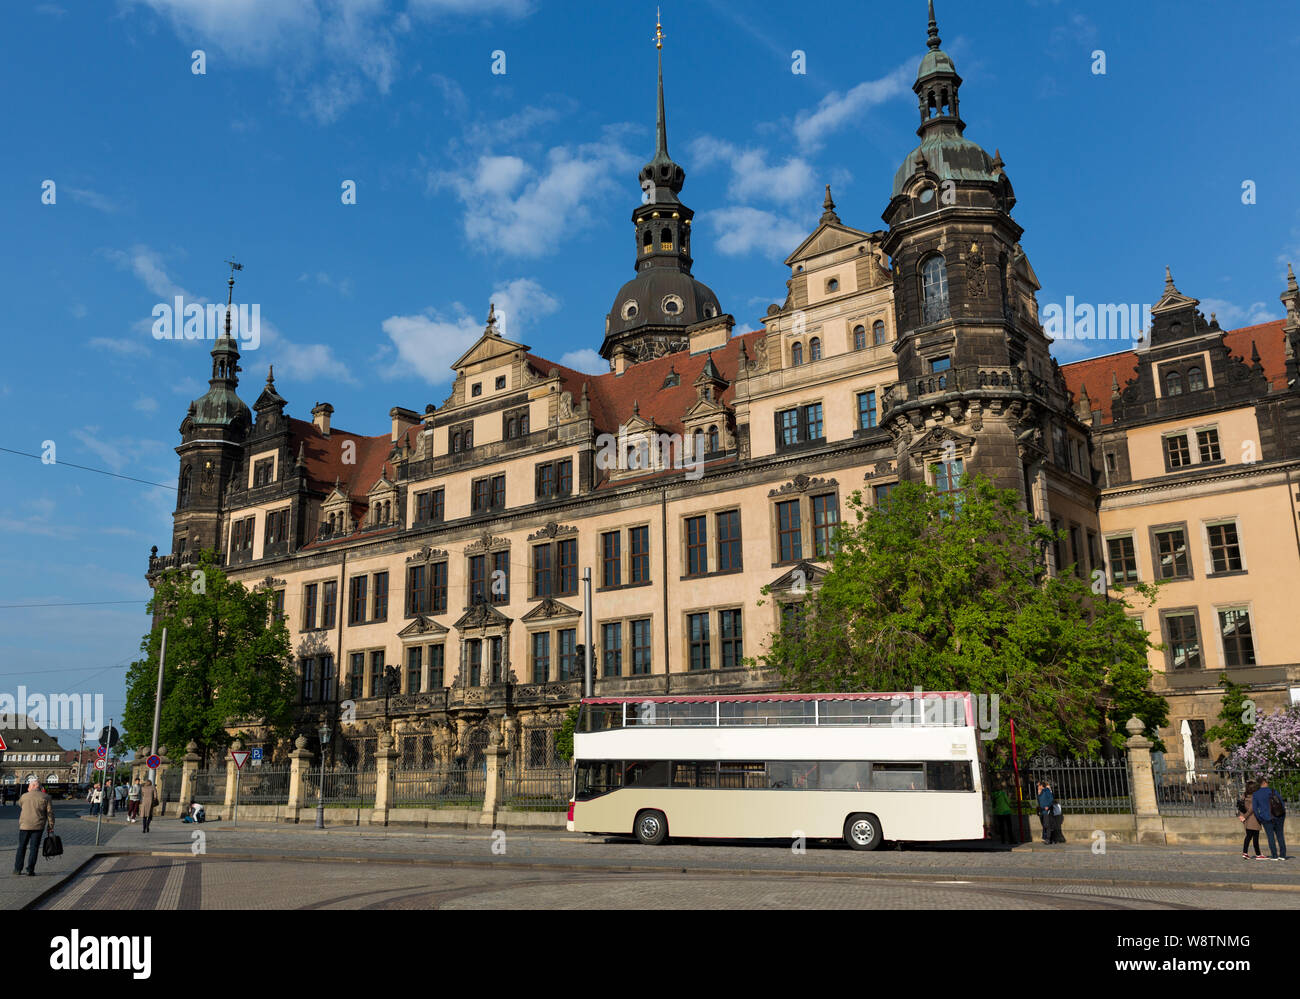 Tour bus at European attractions, ancient castle Stock Photo